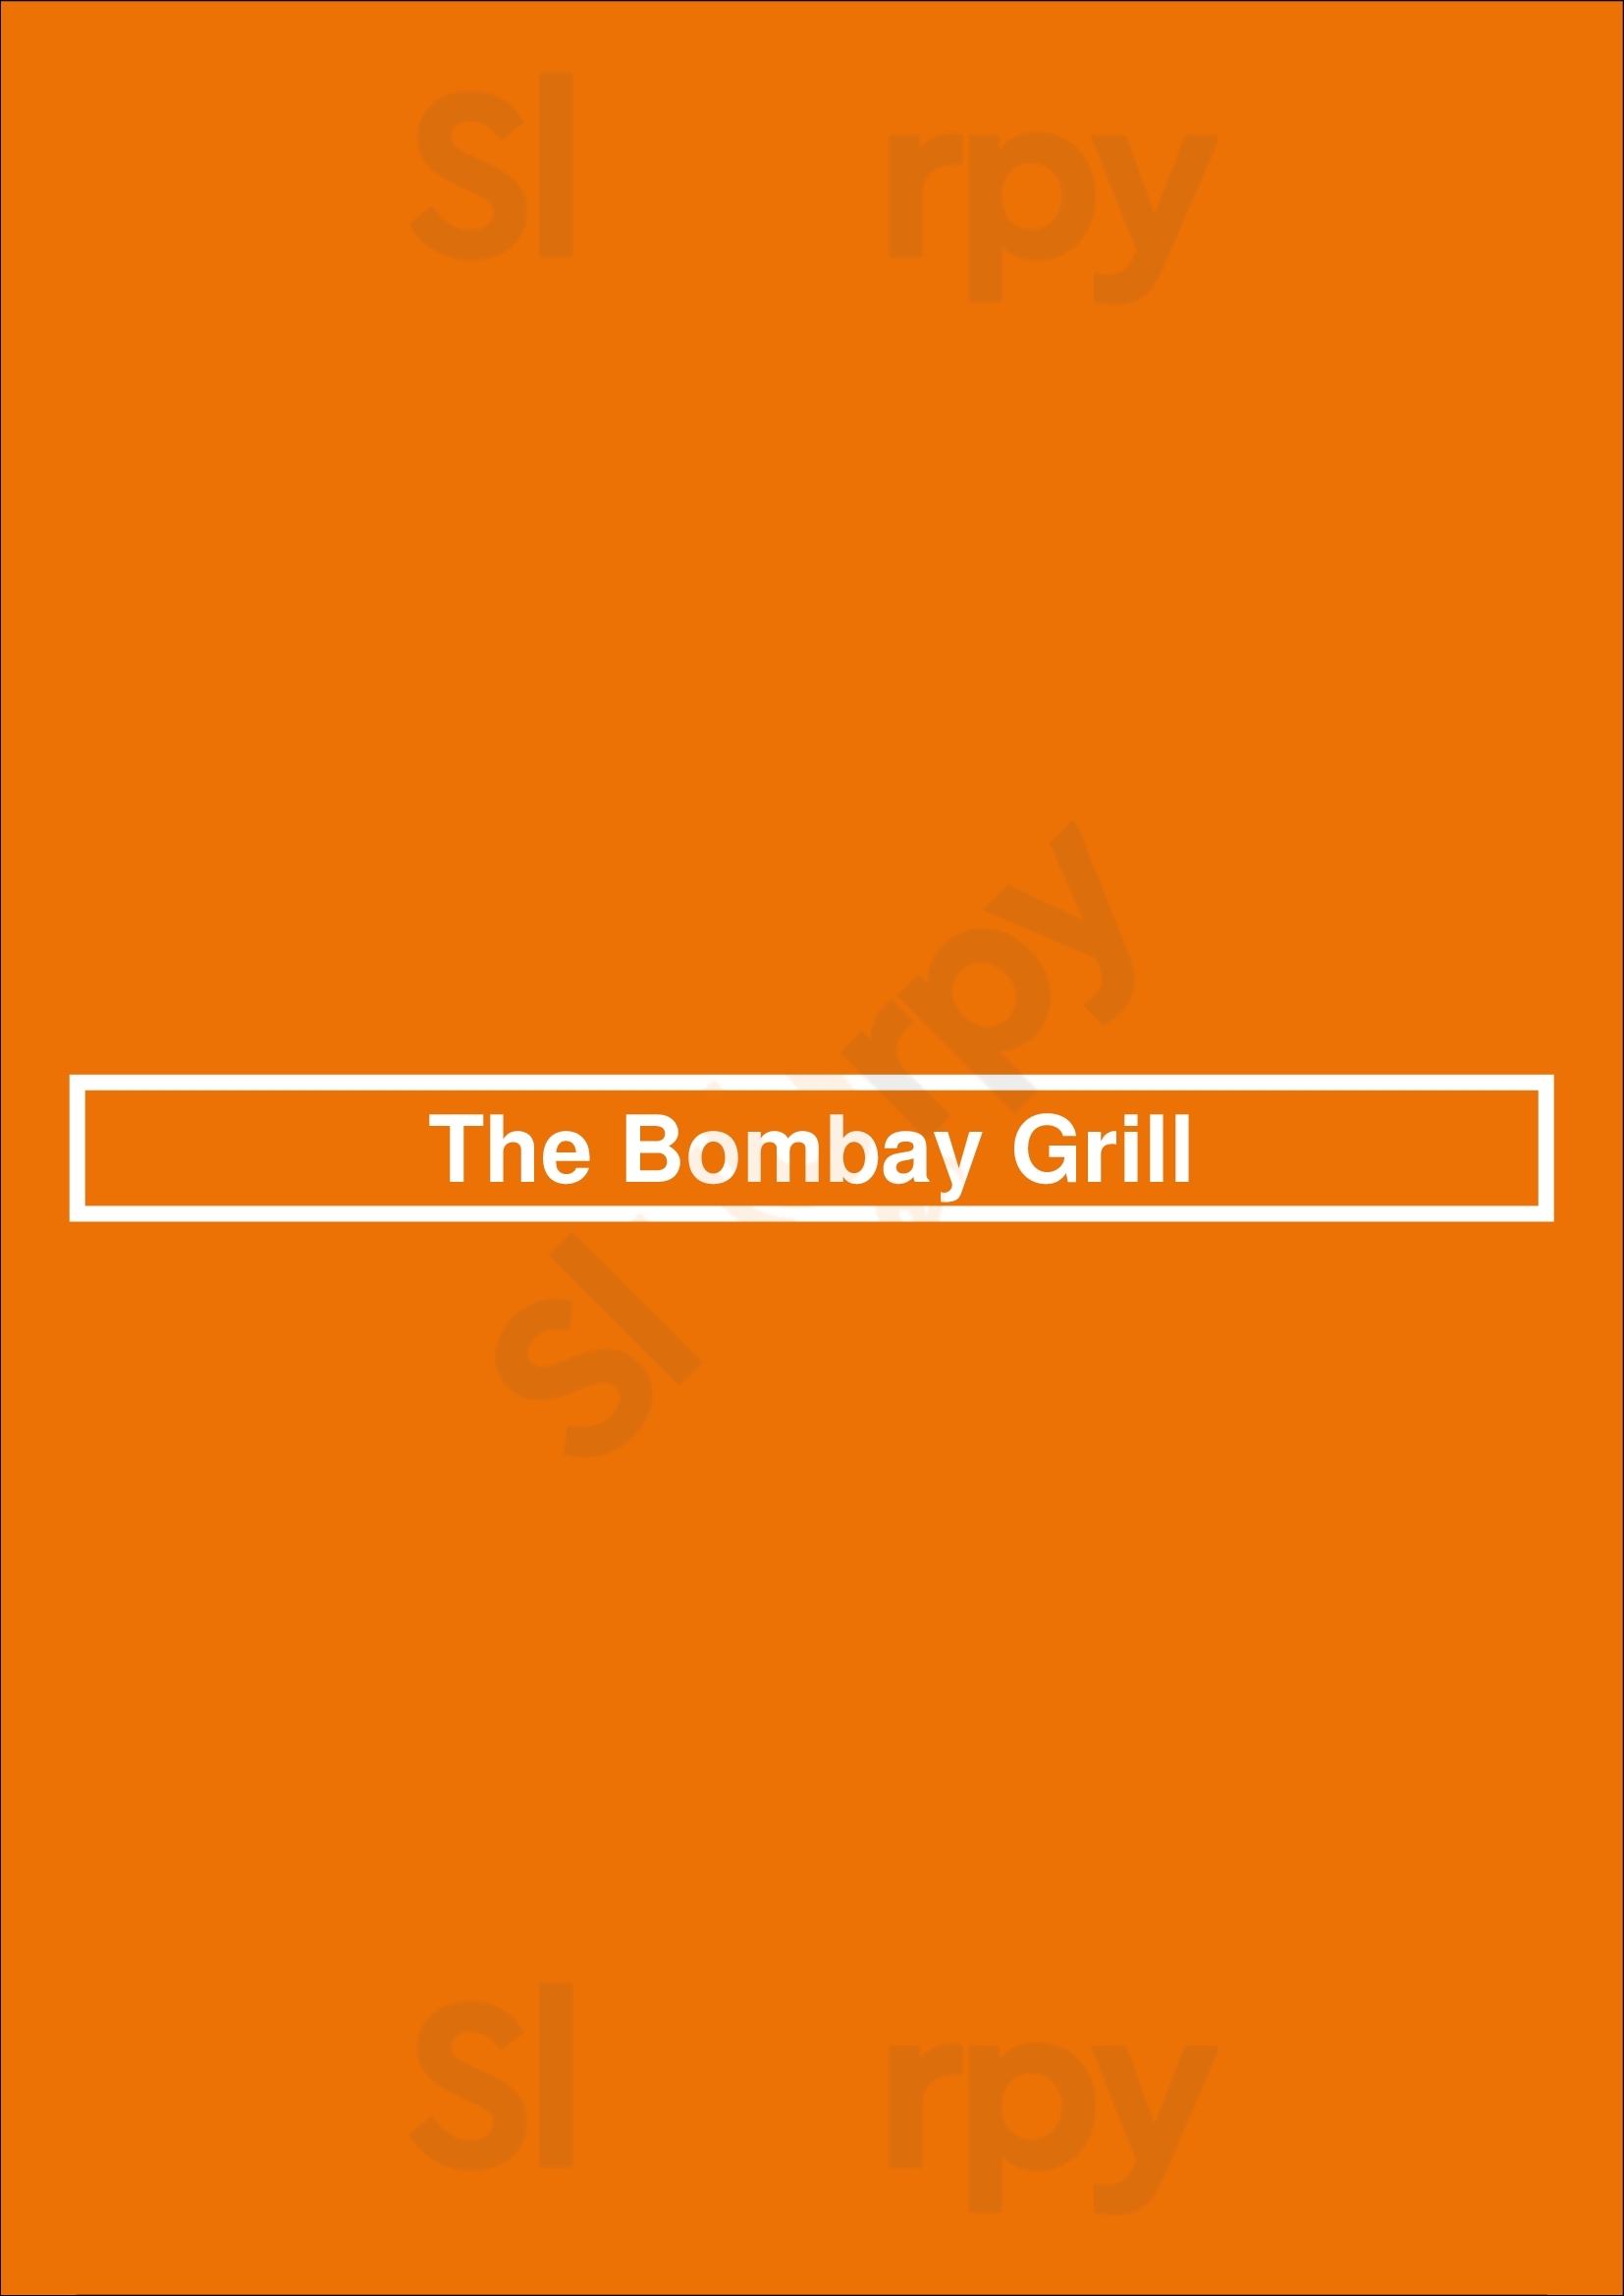 The Bombay Grill Markham Menu - 1